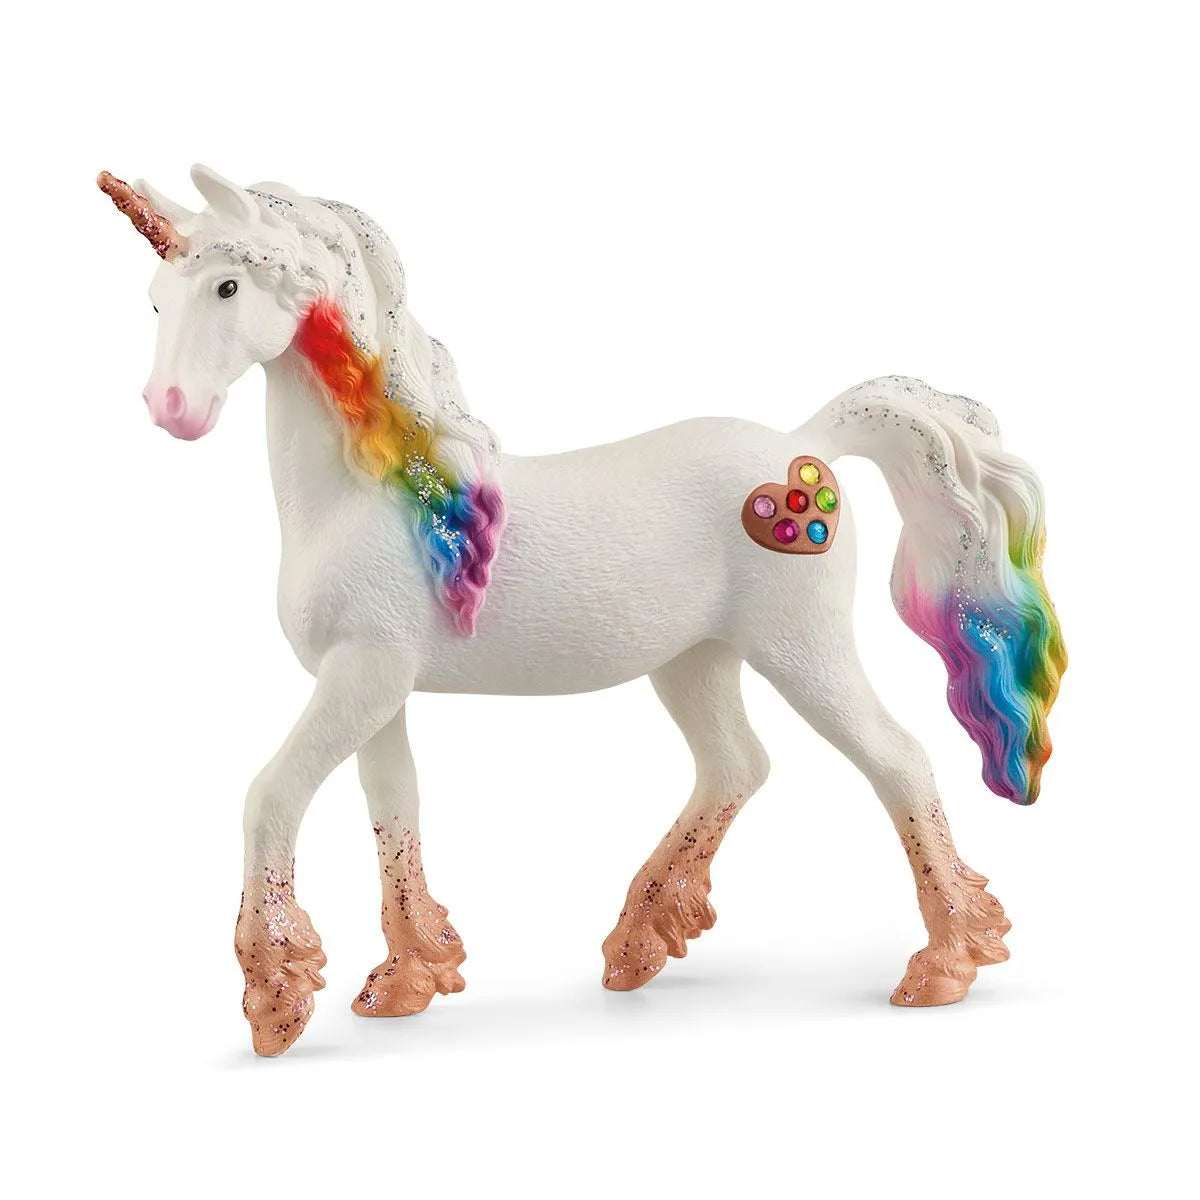 Schleich 70726 Rainbow Love Unicorn Mare - Hobbytech Toys